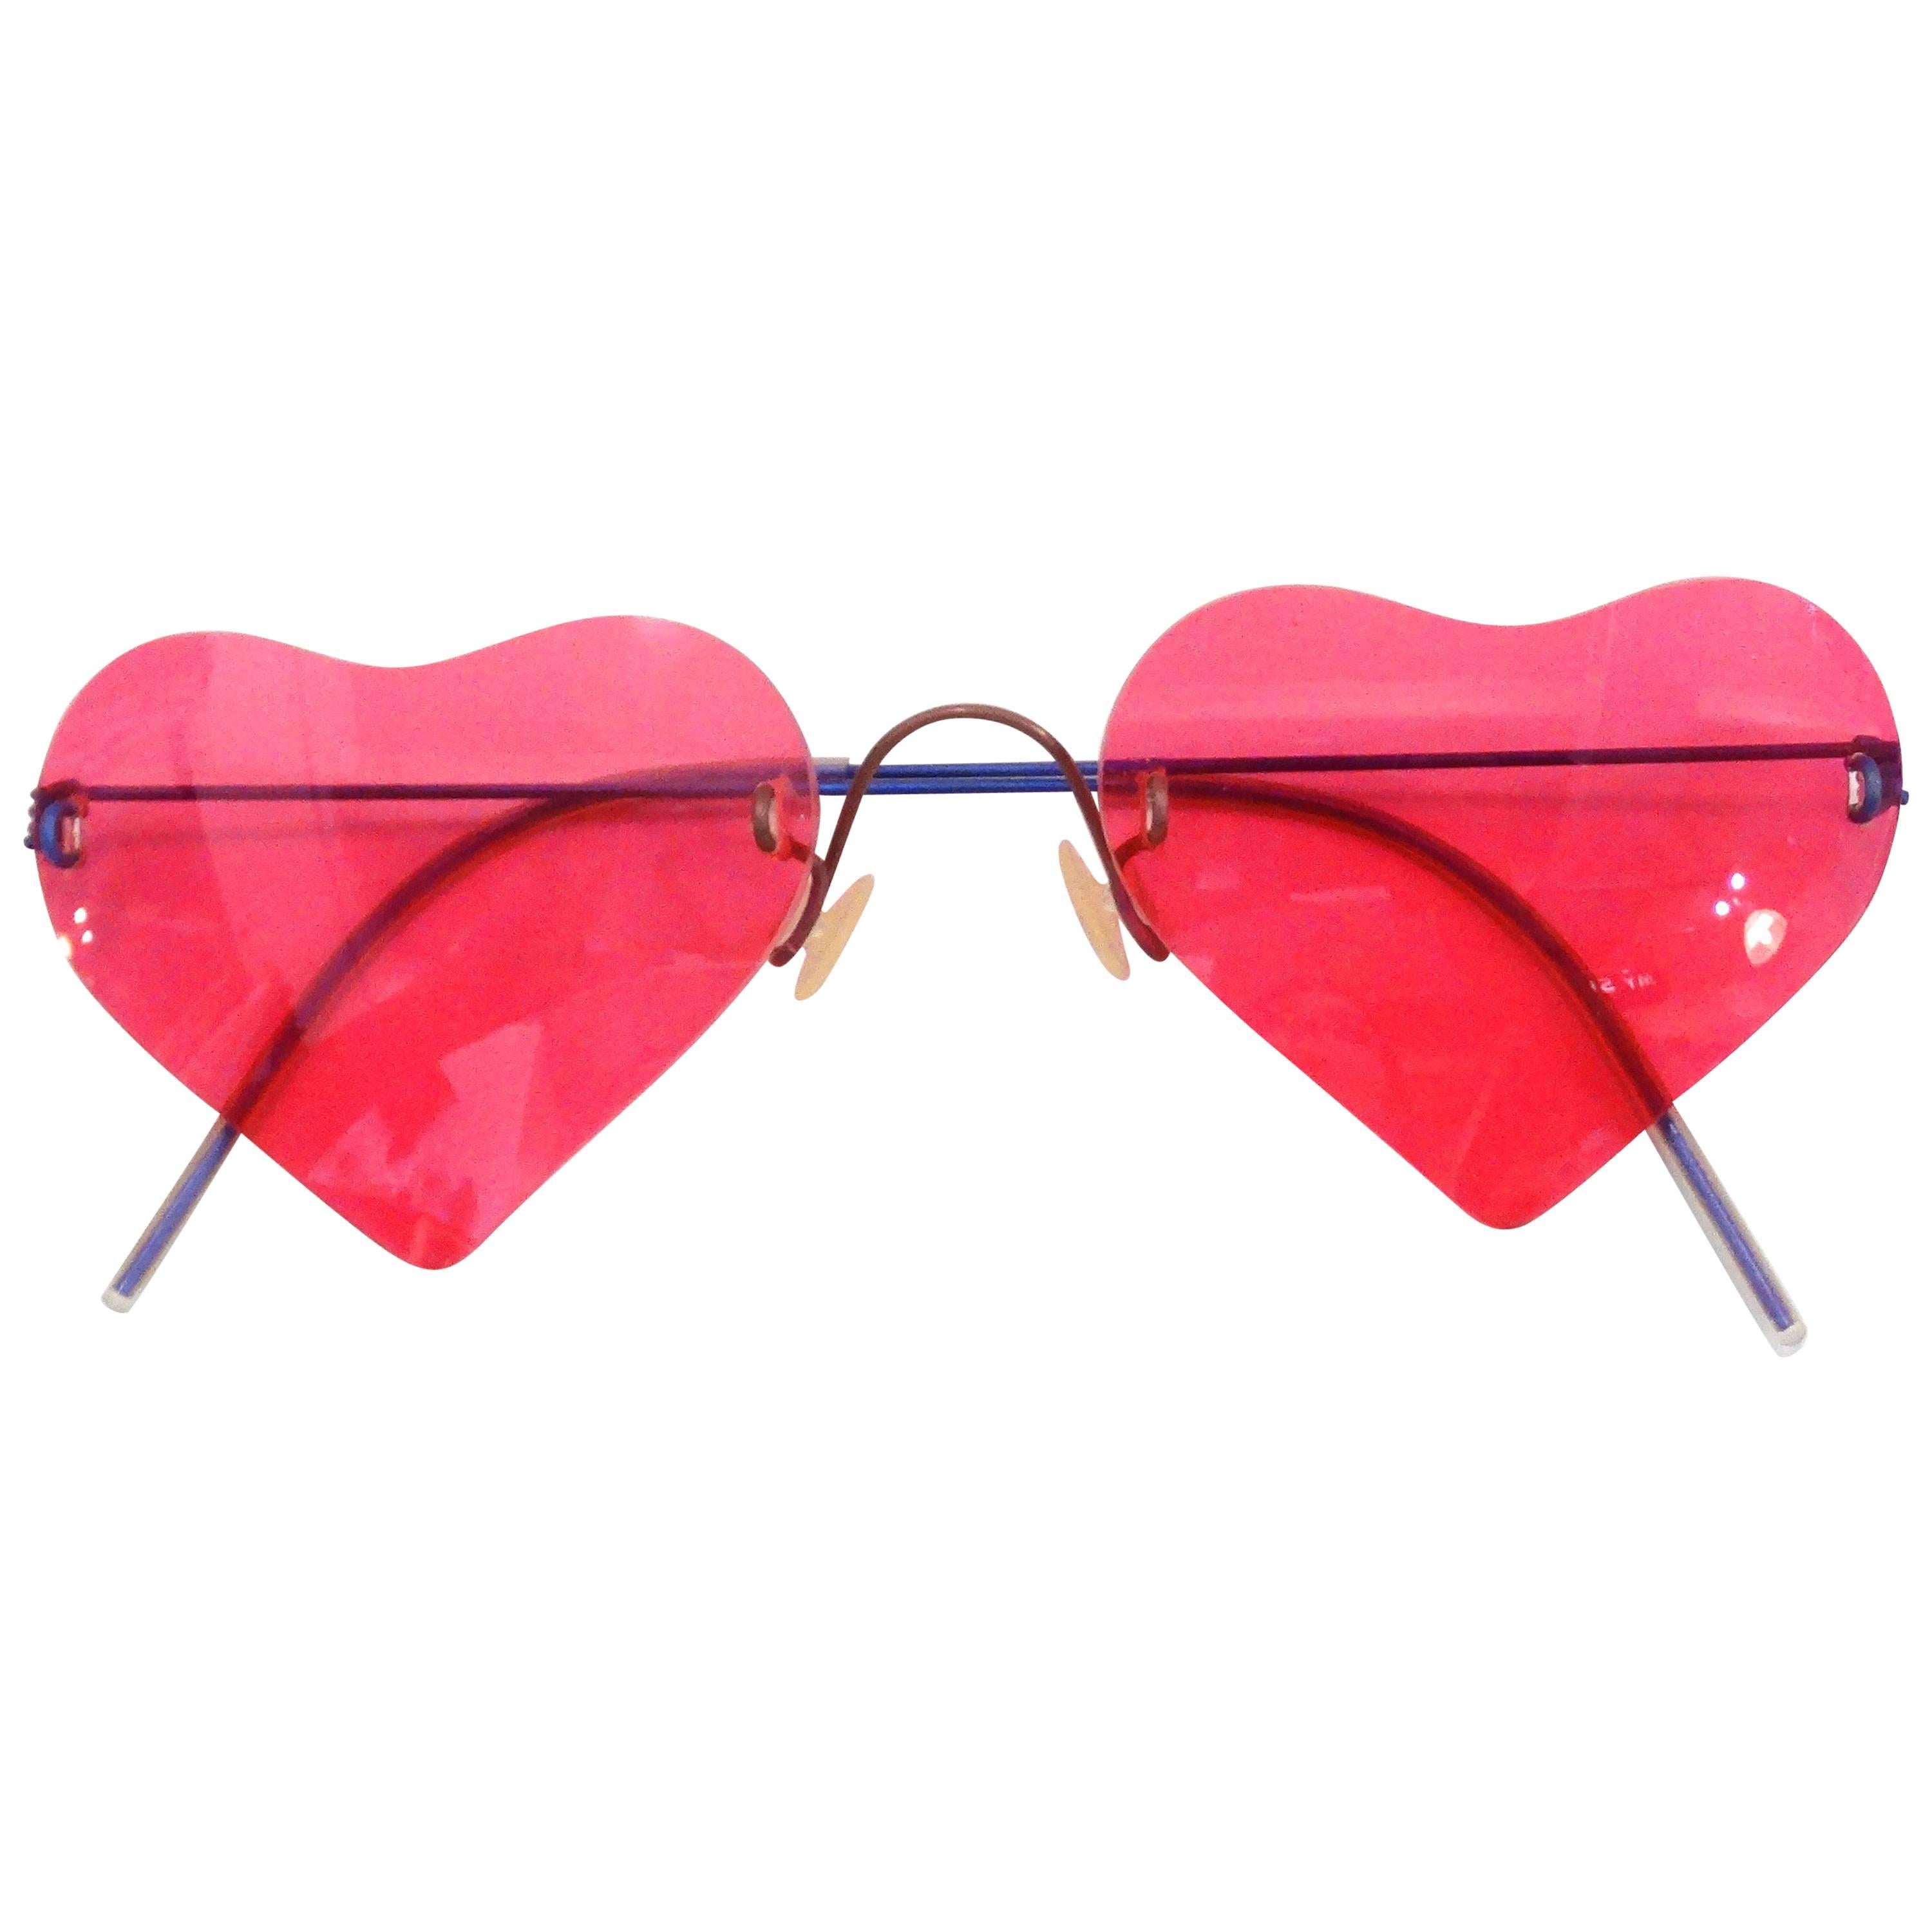 Lindberg Eyewear Lolita Heart Shaped Sunglasses